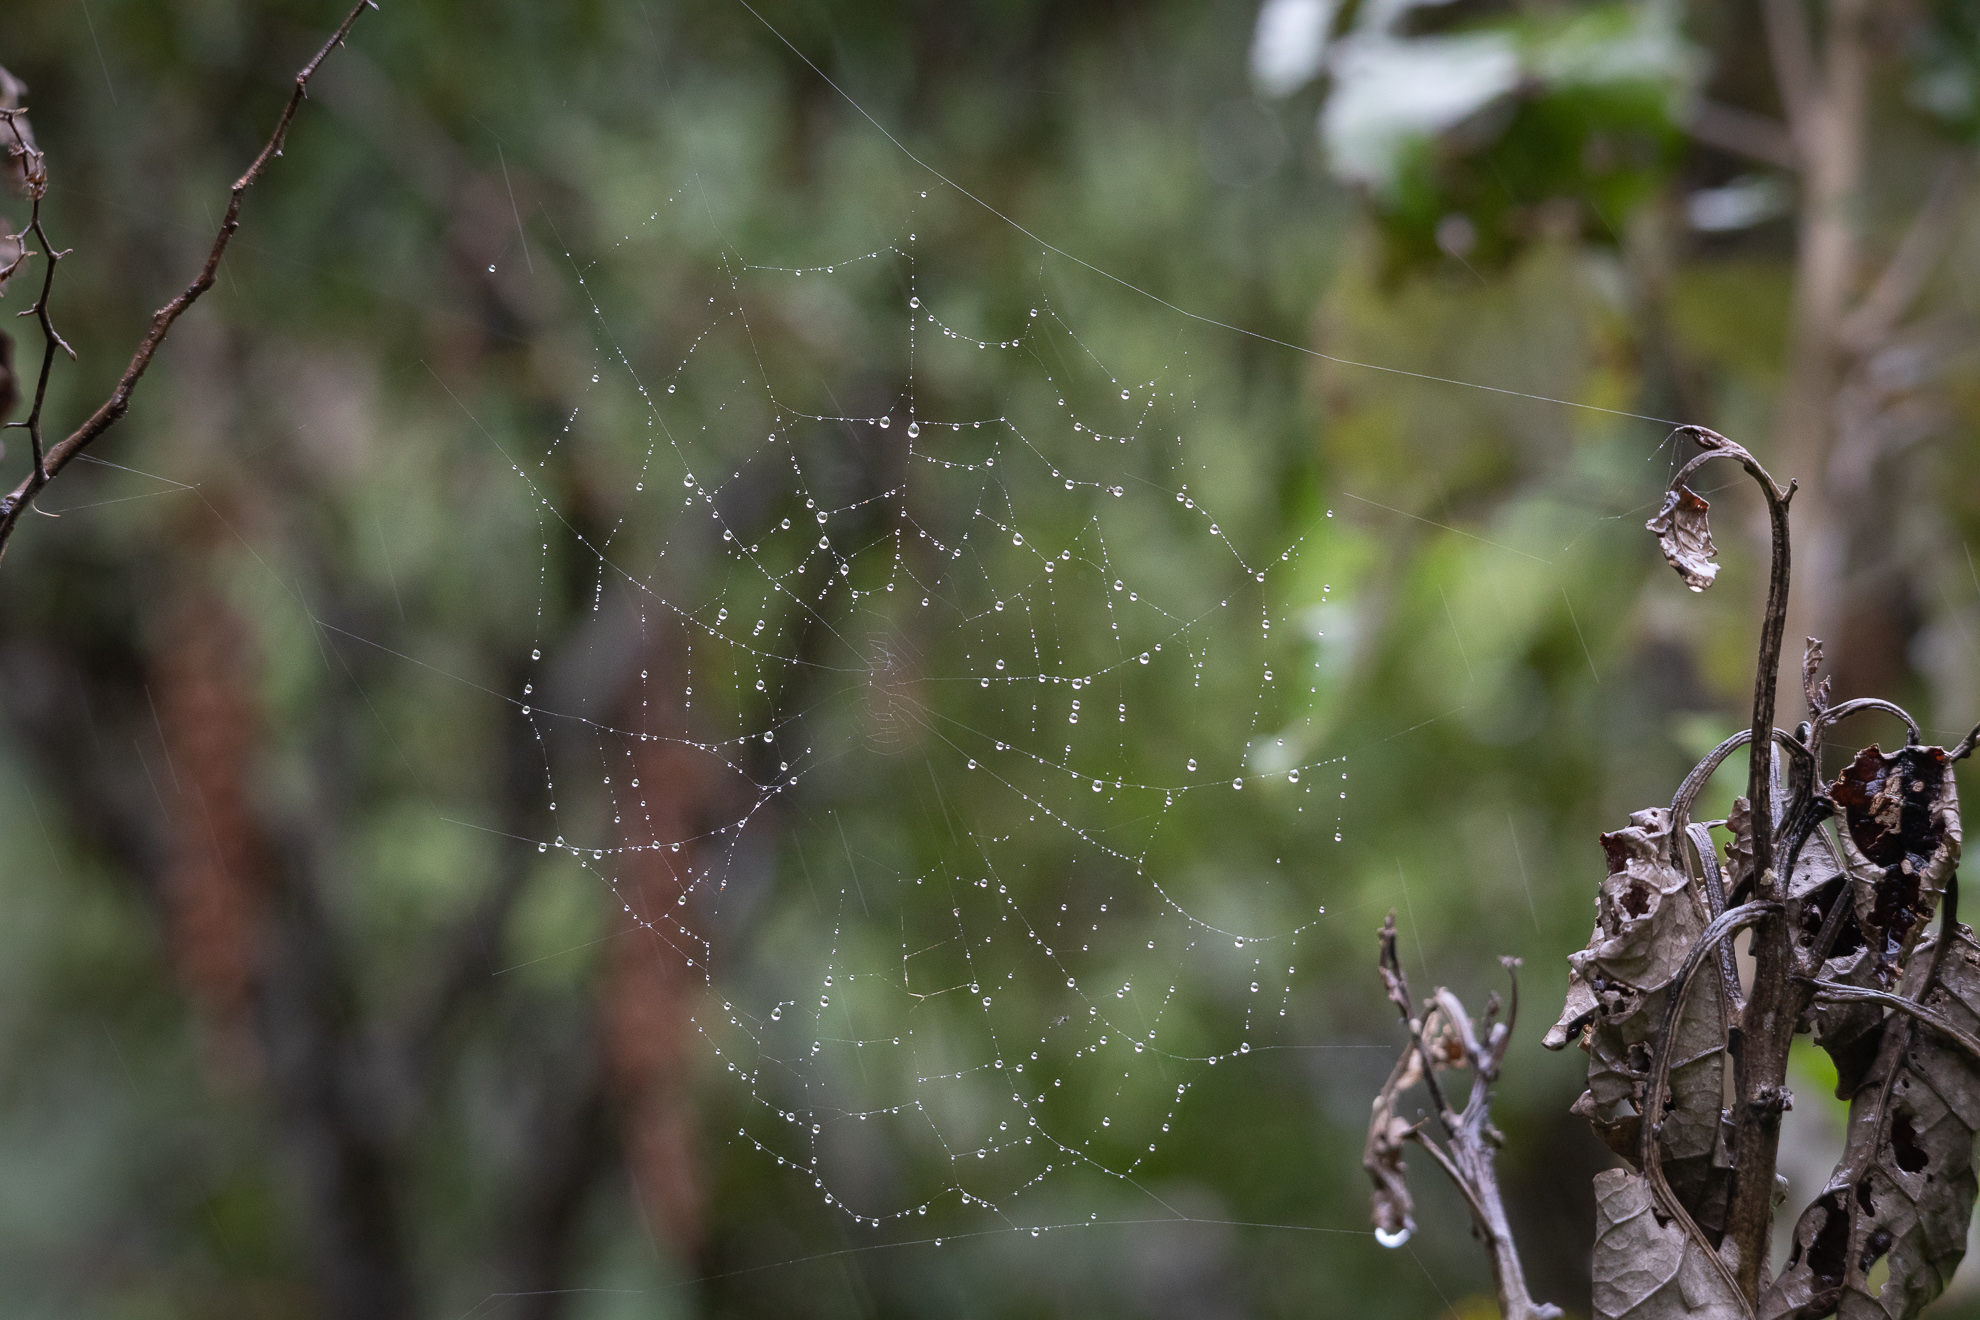 Raindrop spider web